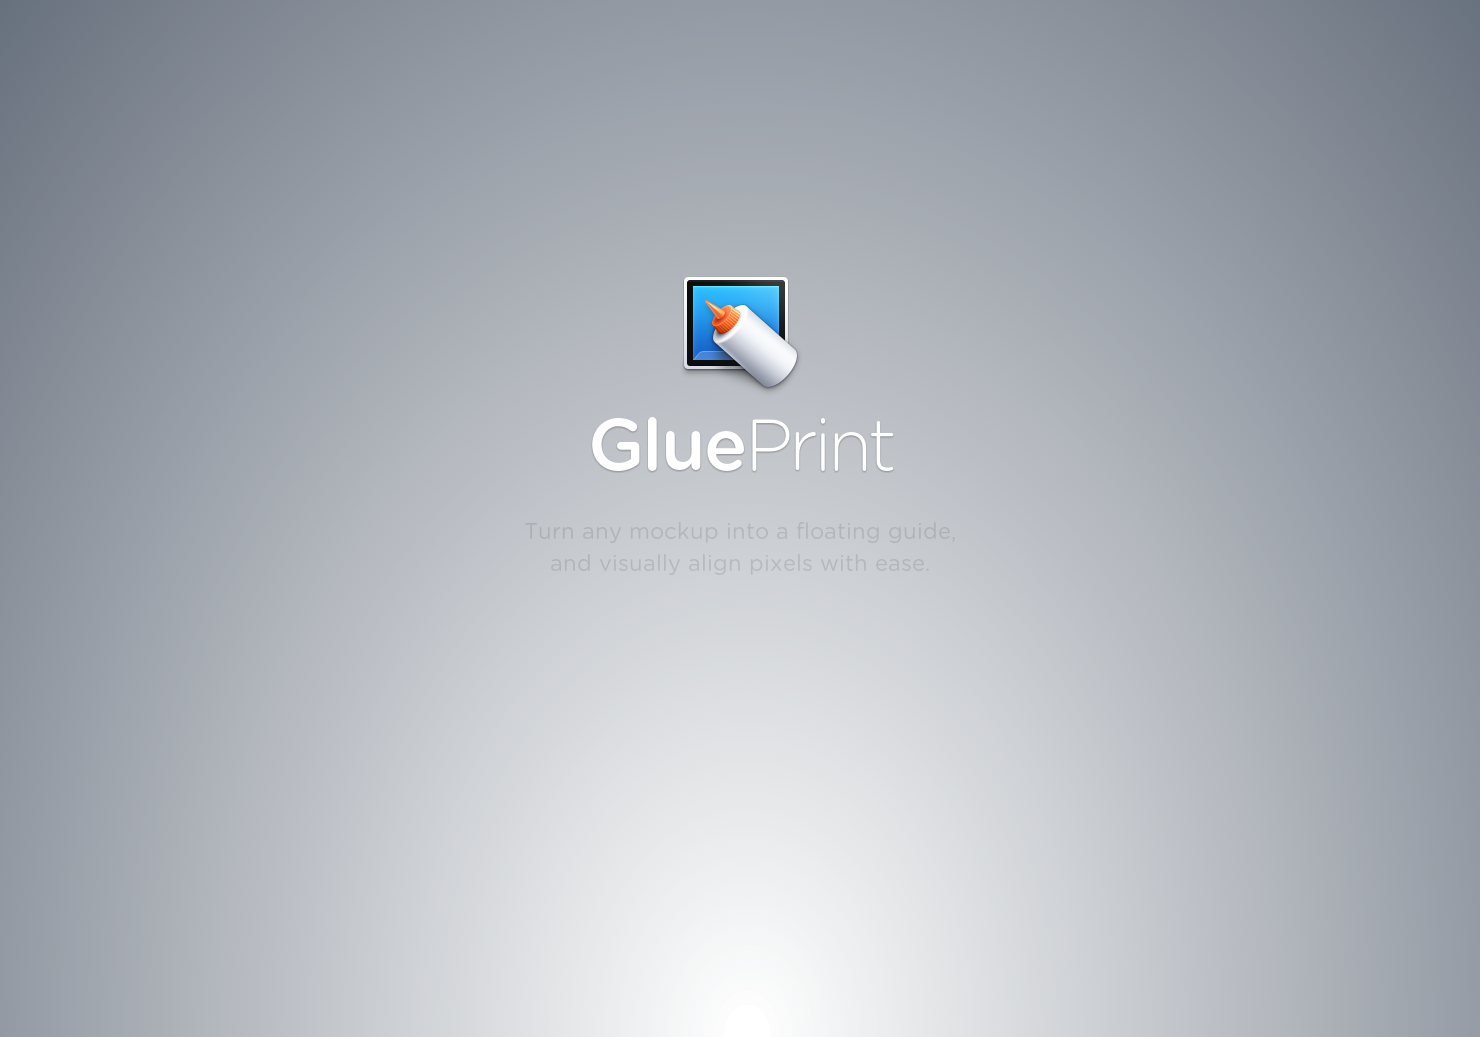 GluePrint